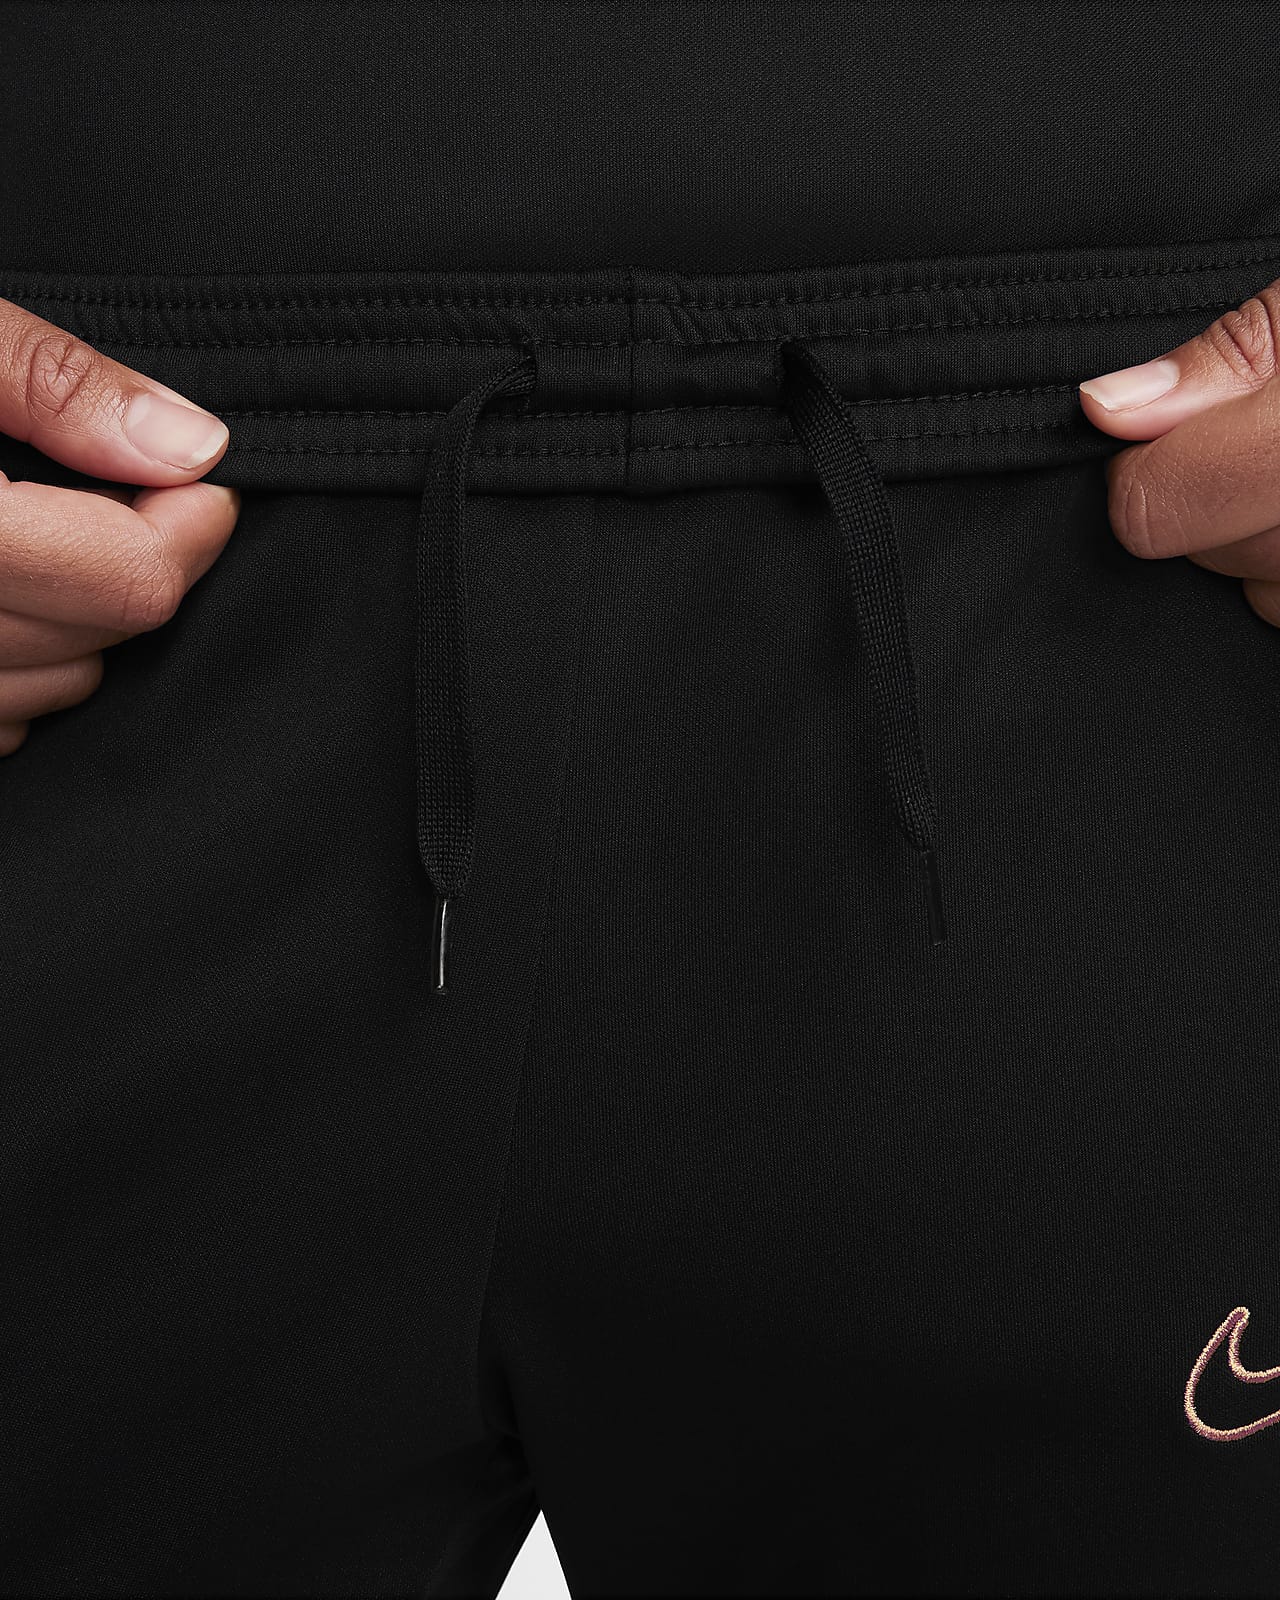 Nike dri Fit Strike Women’s Football Pants Large L Trousers Training  Joggers New